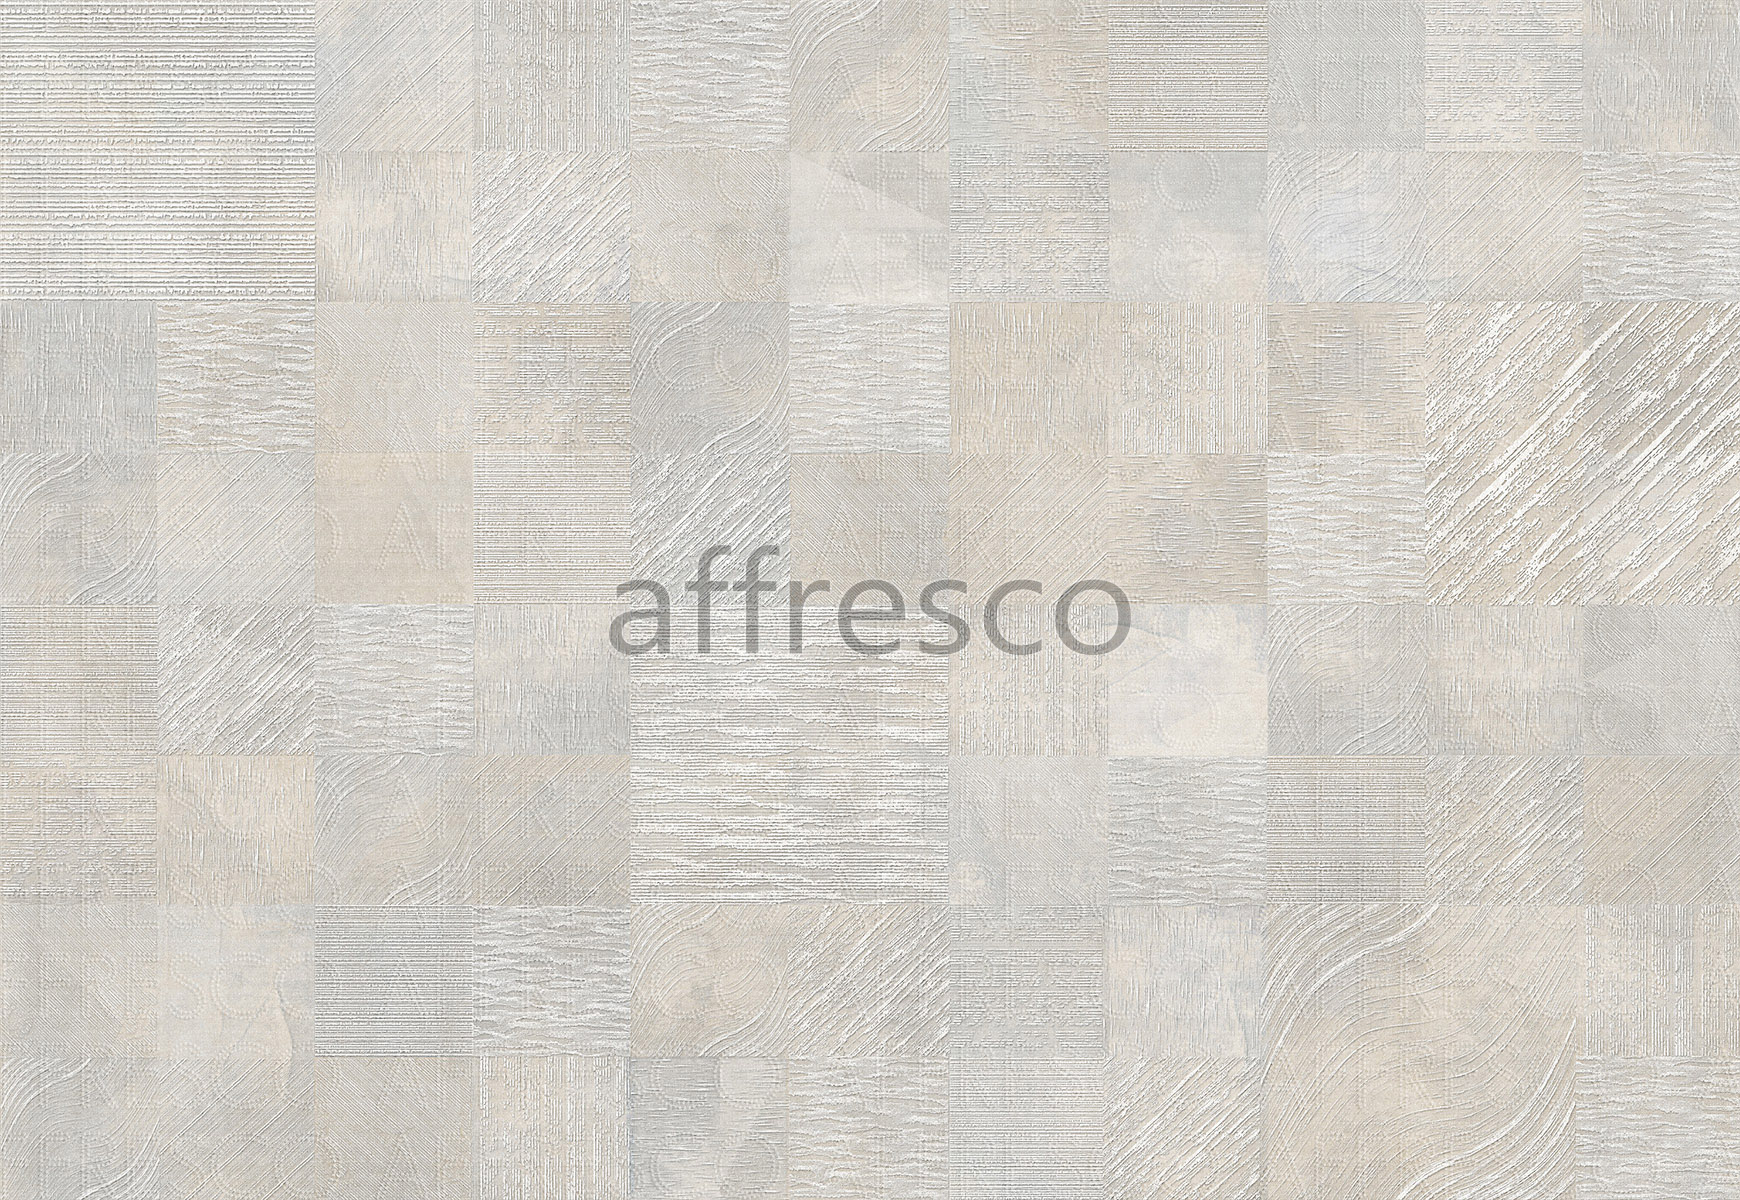 ID136352 | Geometry |  | Affresco Factory